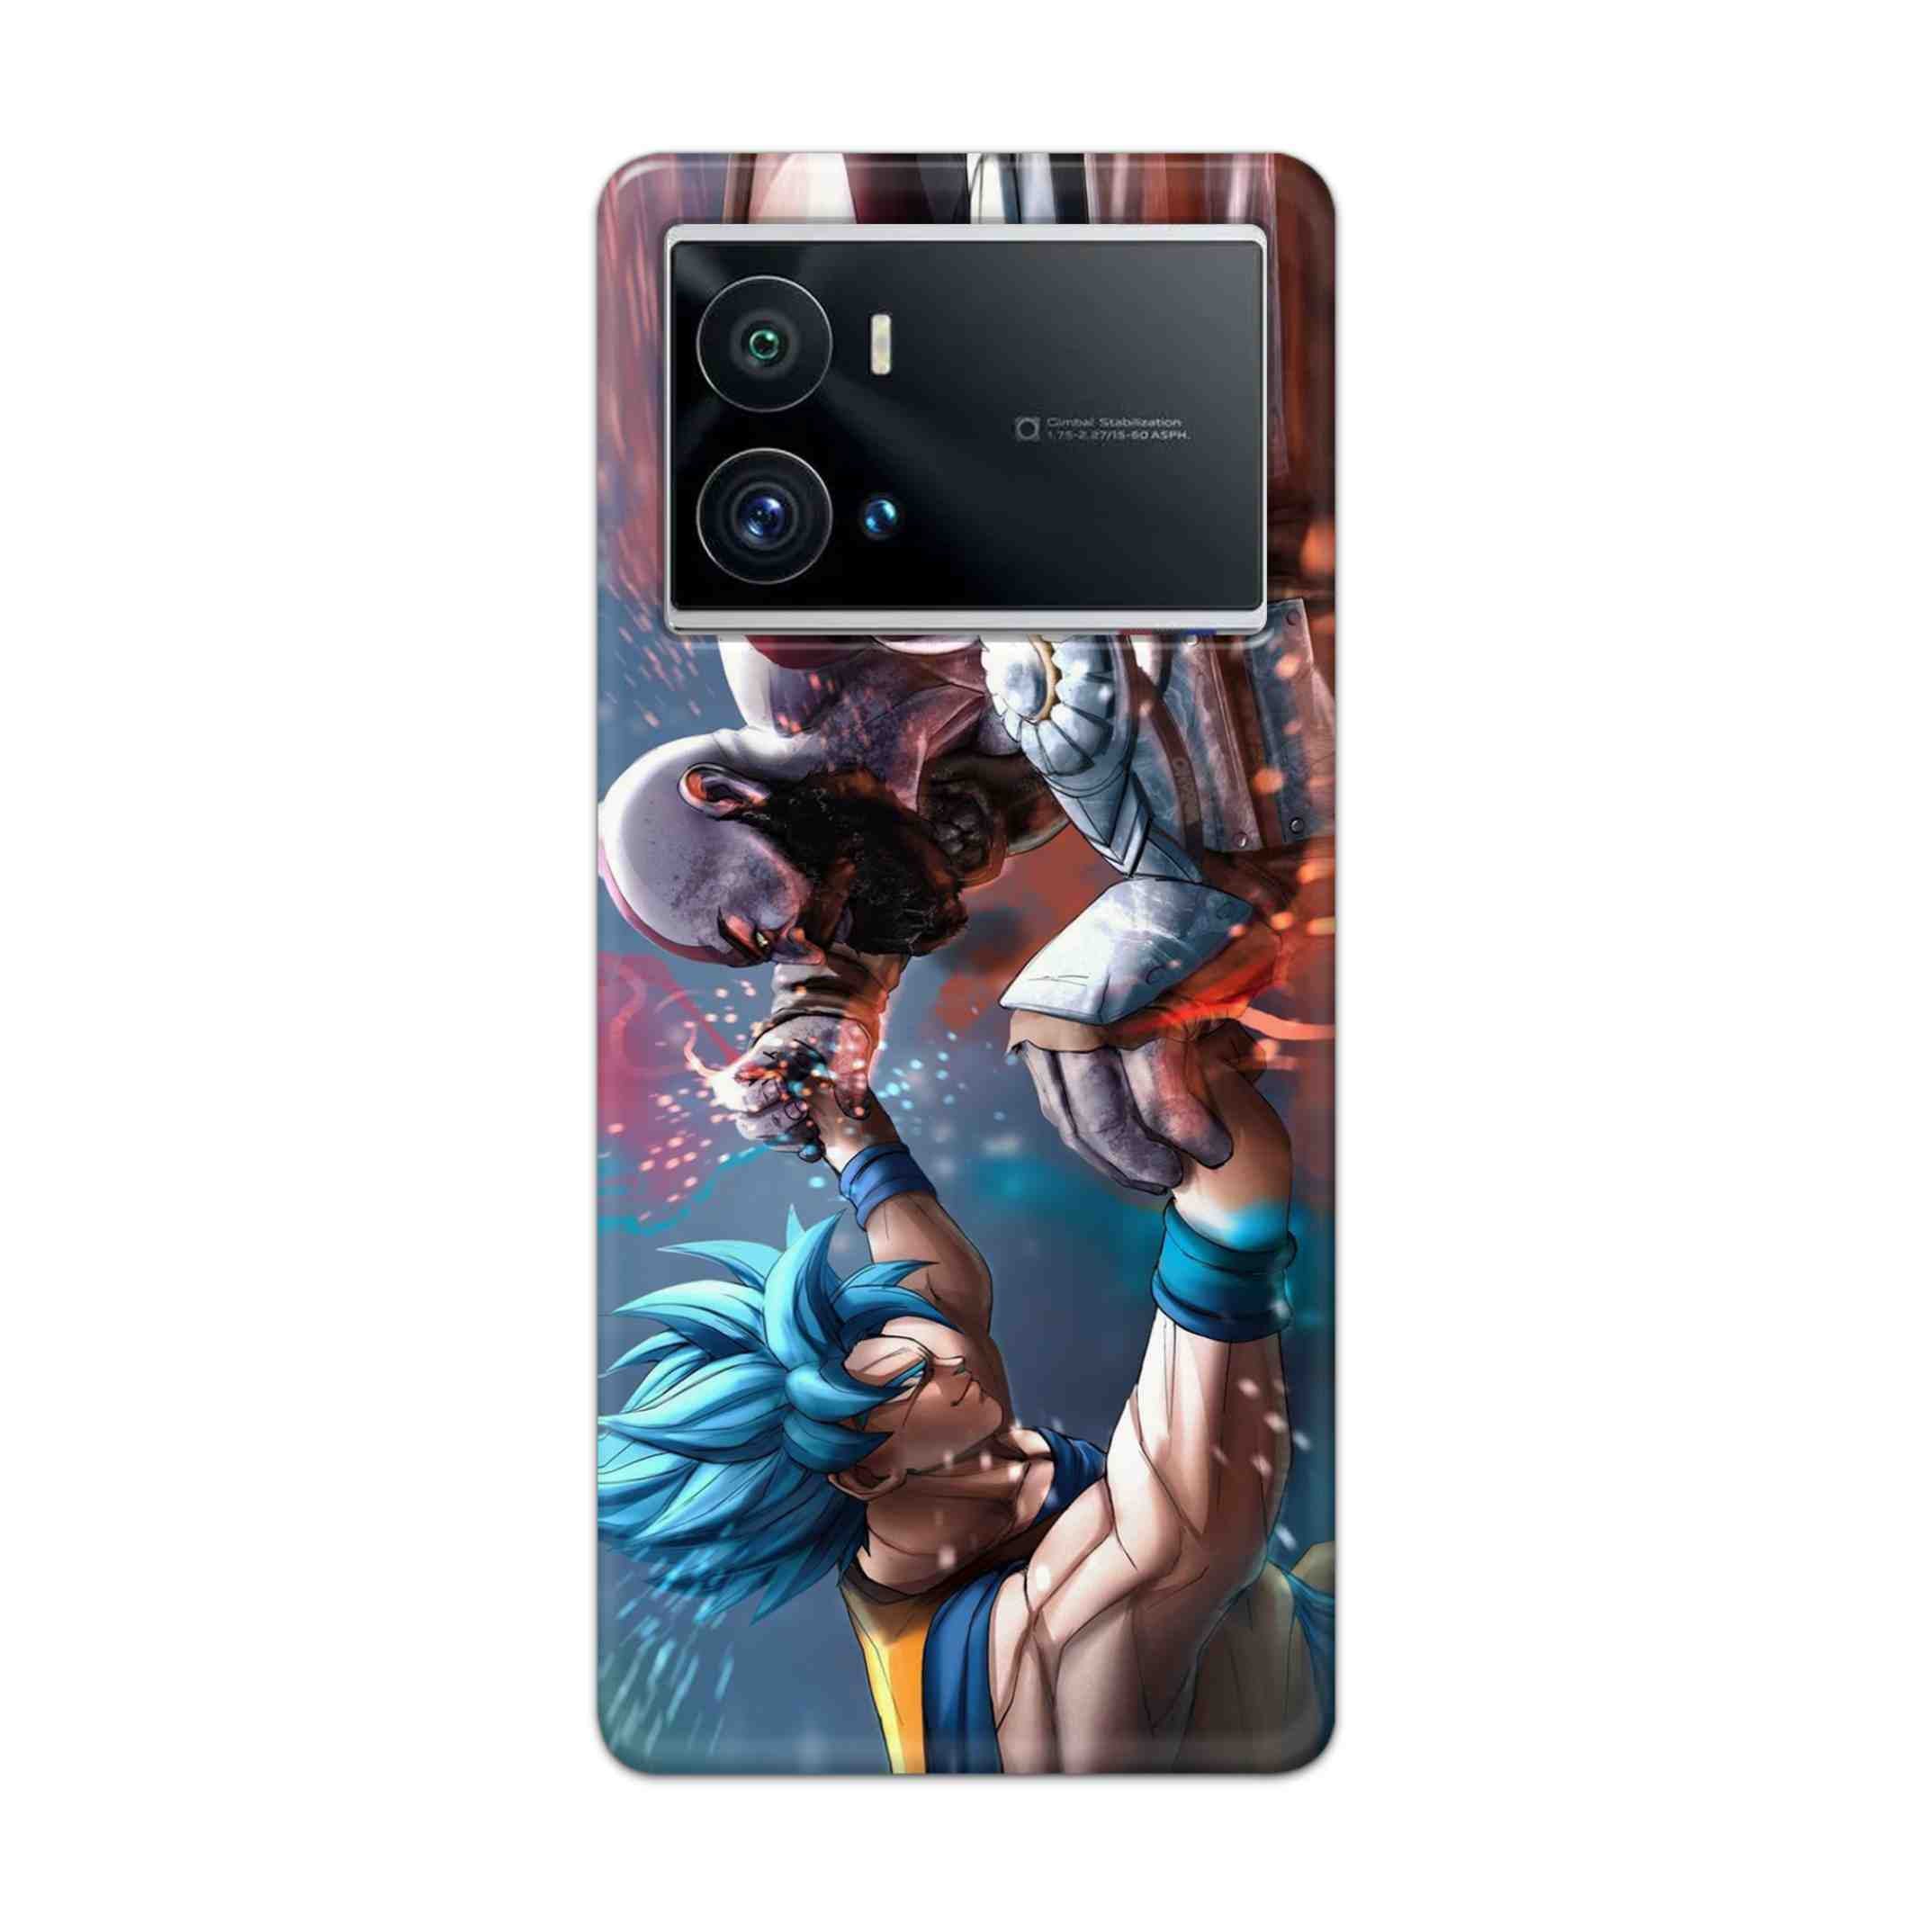 Buy Goku Vs Kratos Hard Back Mobile Phone Case Cover For iQOO 9 Pro 5G Online